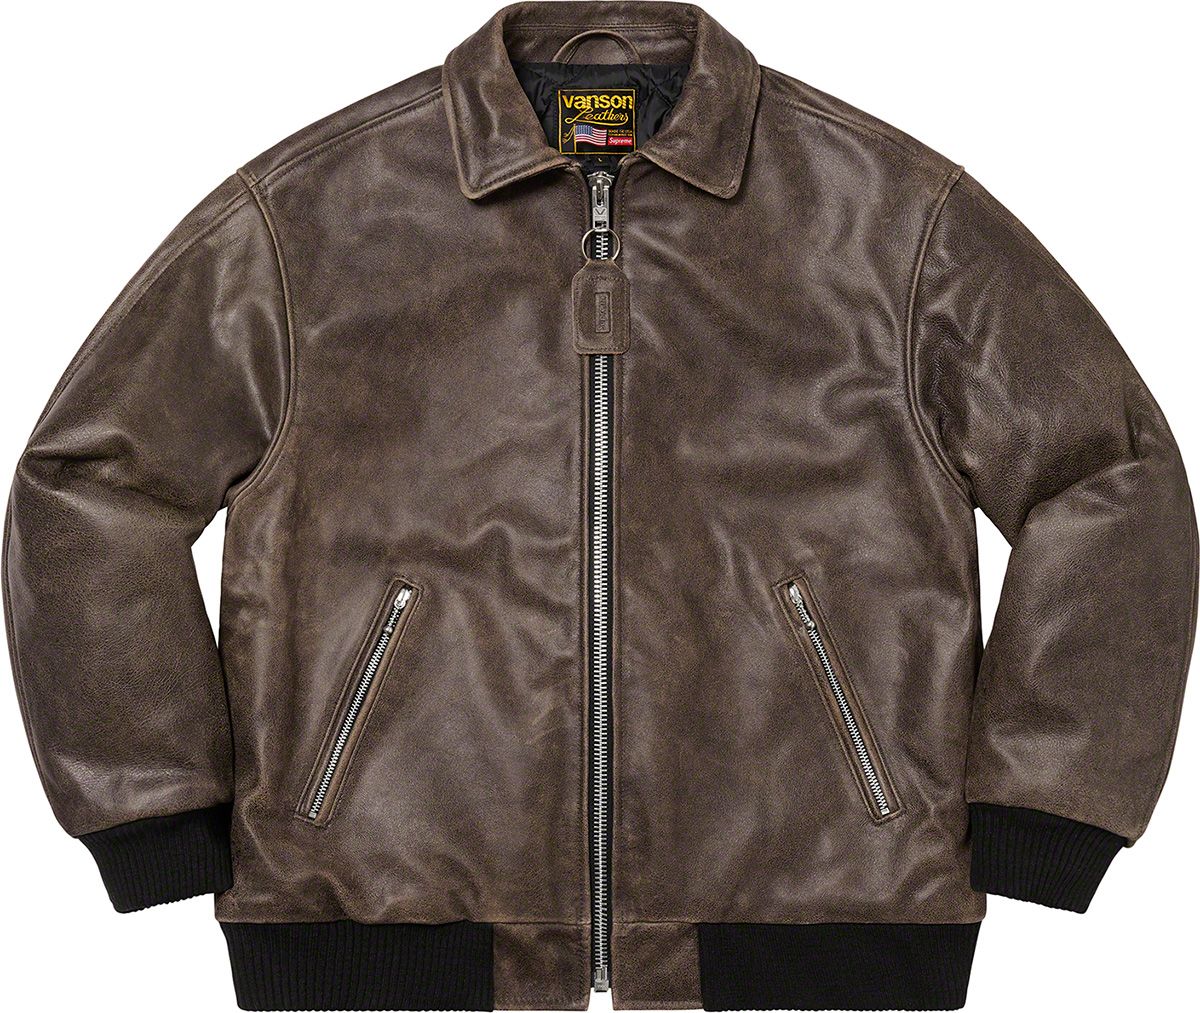 Supreme®/Vanson Leathers® Worn Leather Jacket - Fall/Winter 2020 